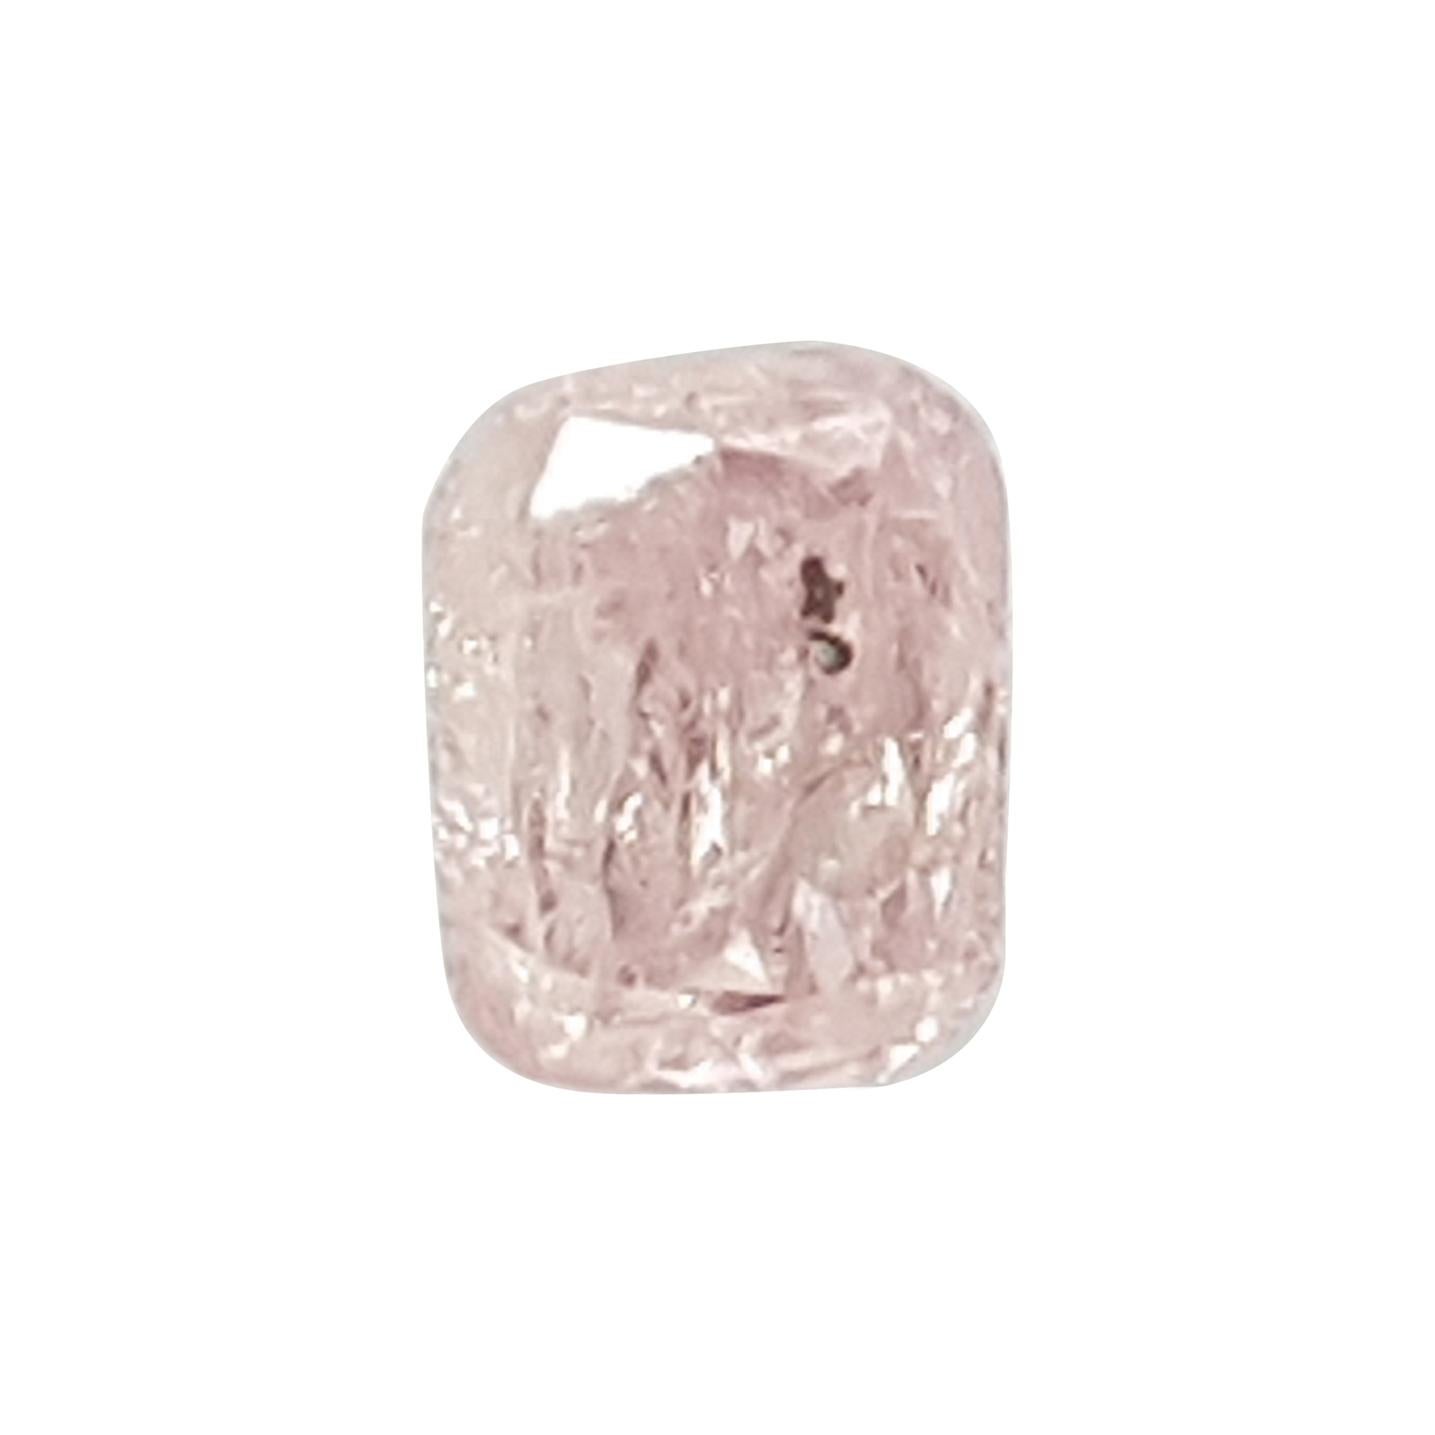 0.28 Carat EGL Certificate Fancy Pink Color Radiant Cut Diamond For Sale